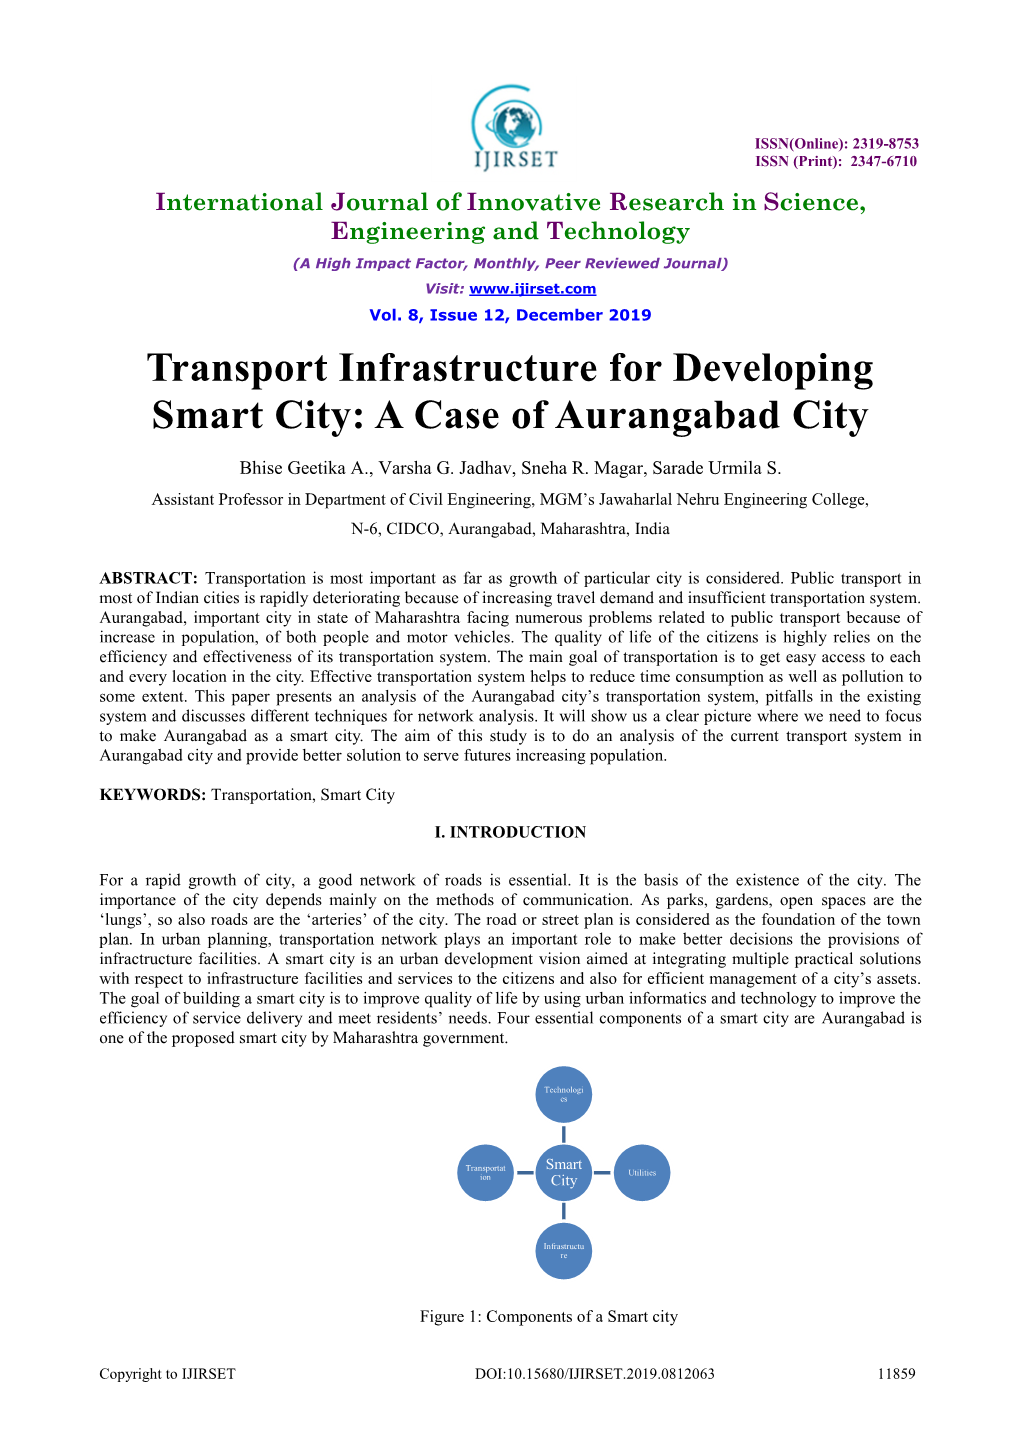 Transport Infrastructure for Developing Smart City: a Case of Aurangabad City